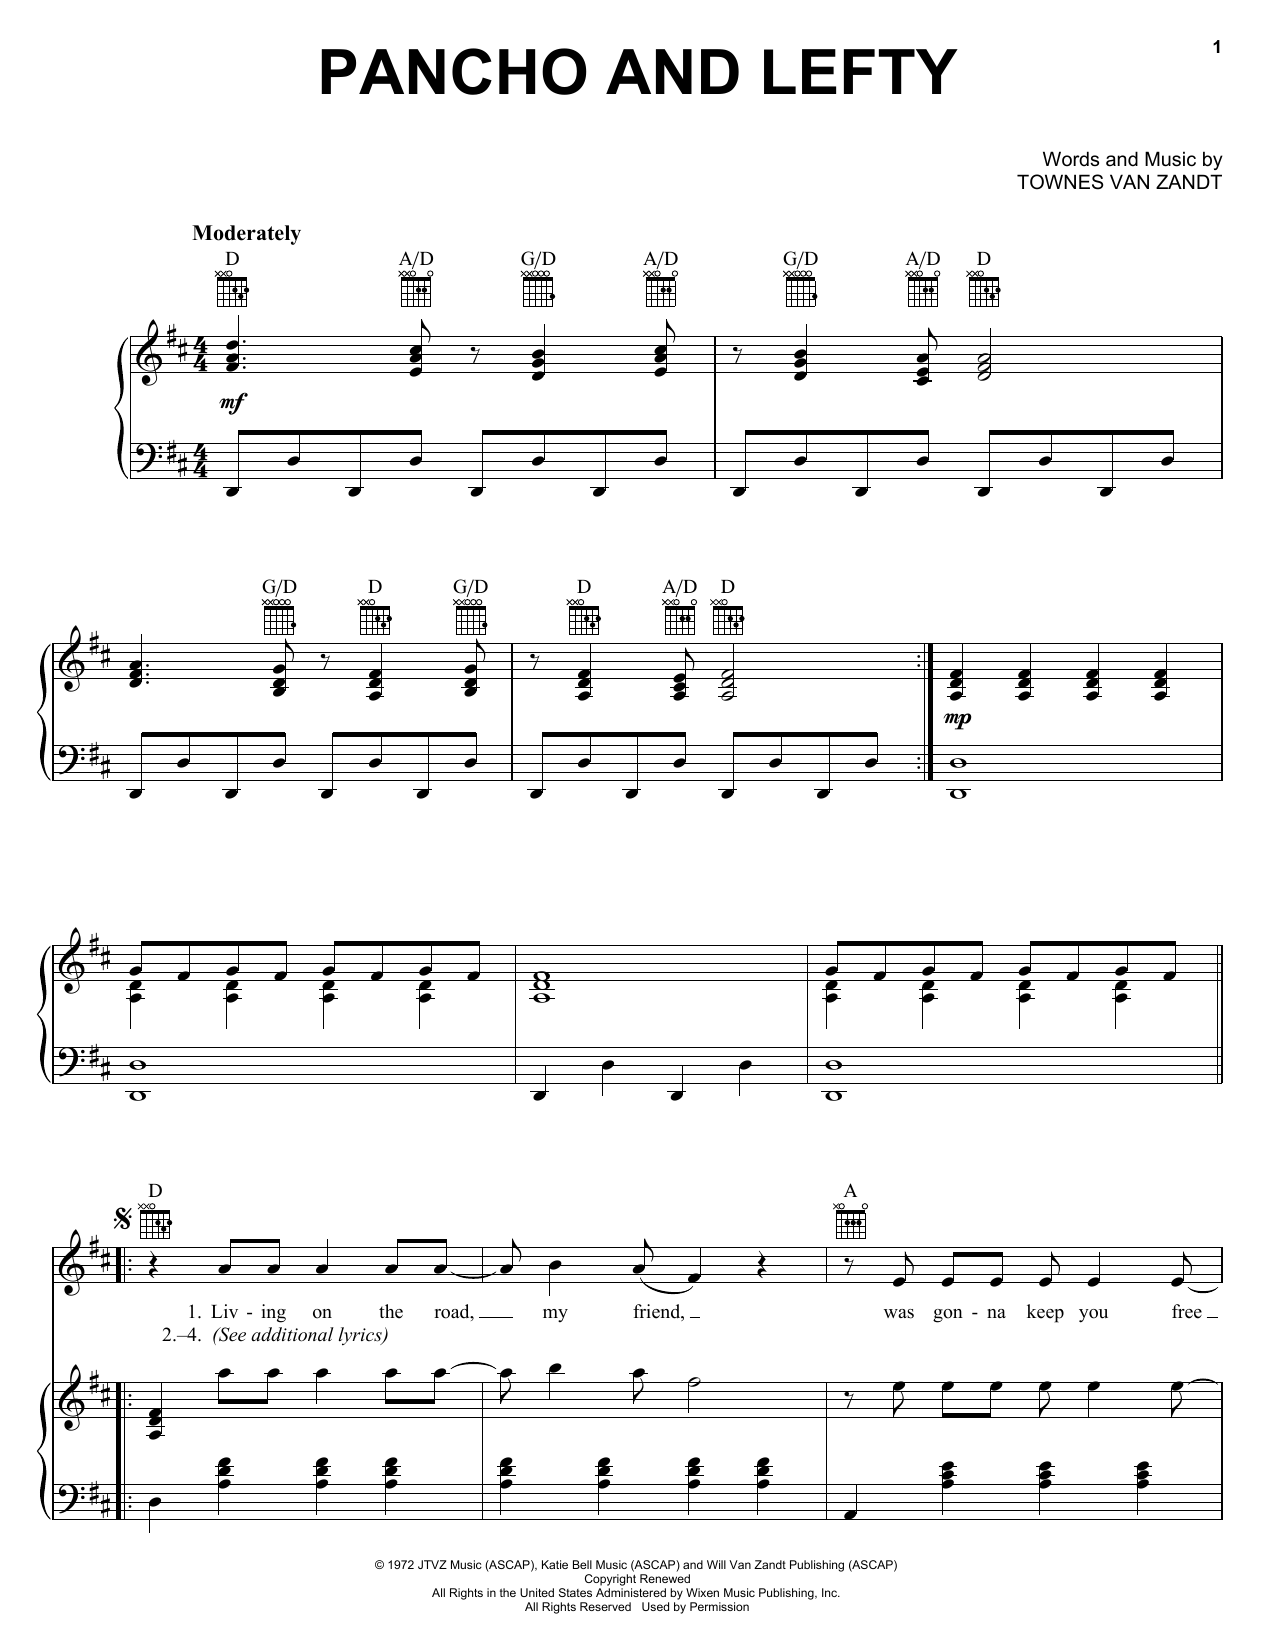 Townes Van Zandt Pancho And Lefty Sheet Music Notes & Chords for Banjo Tab - Download or Print PDF